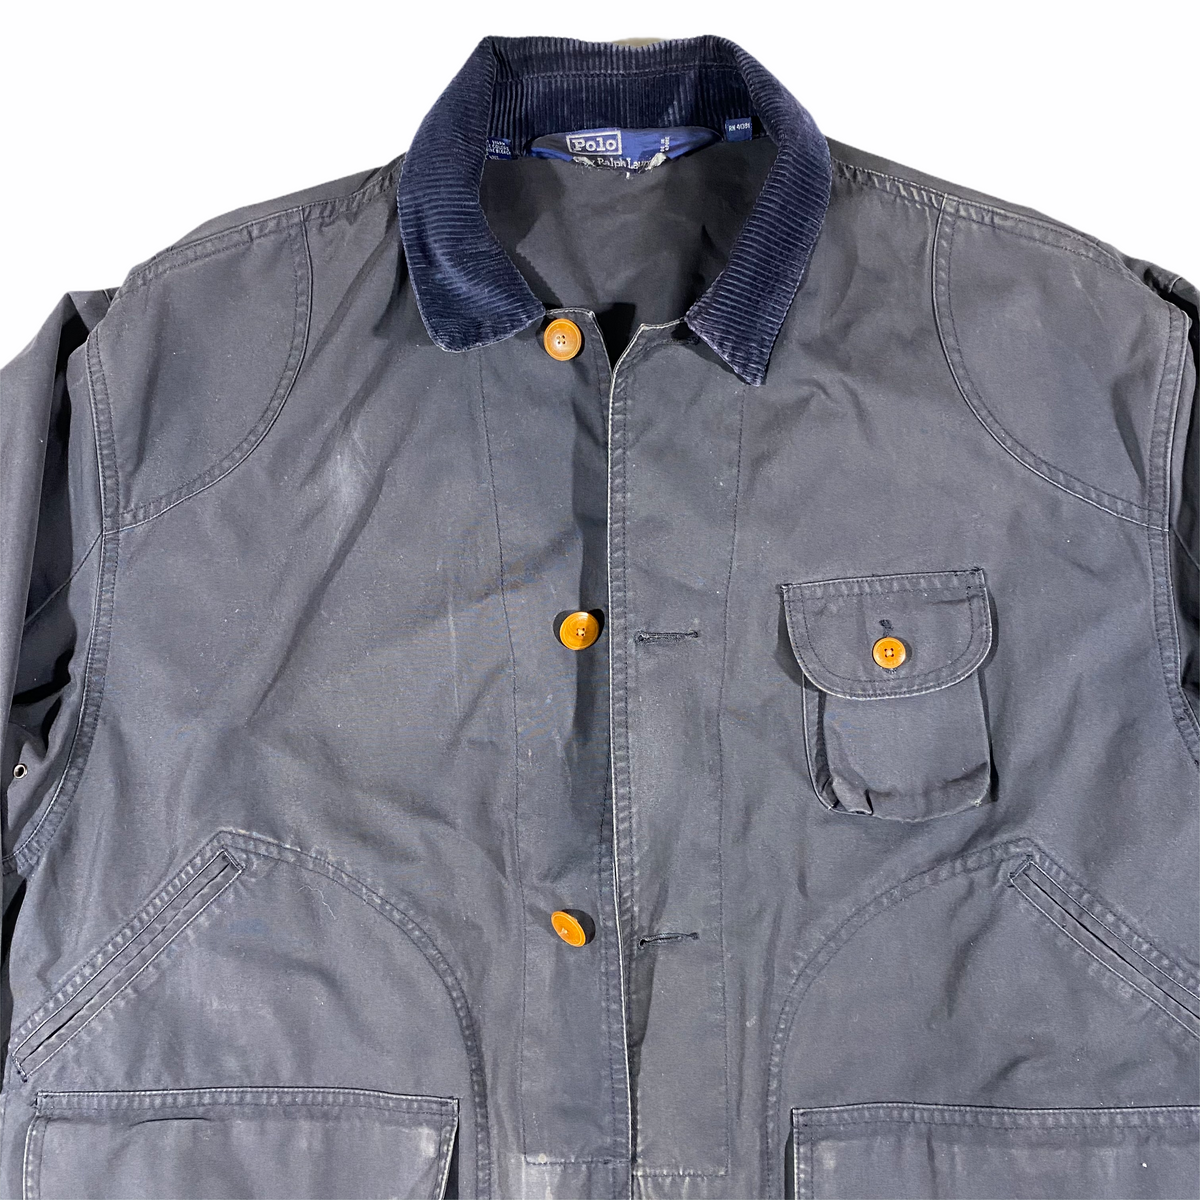 90s Polo ralph lauren tin cloth hunting jacket large – Vintage Sponsor